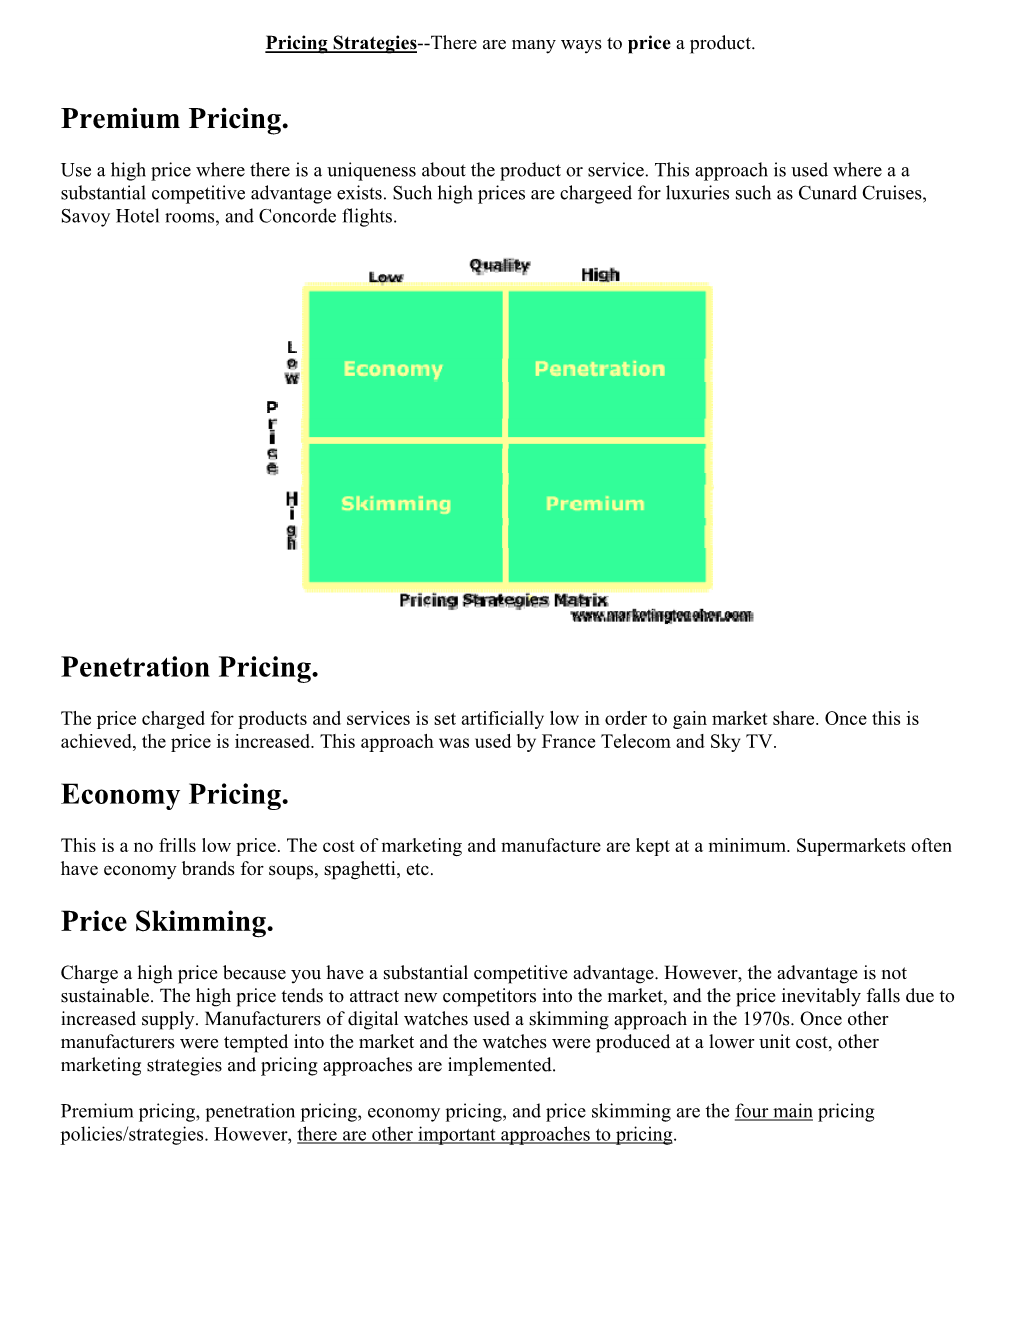 Premium Pricing. Penetration Pricing. Economy Pricing. Price Skimming